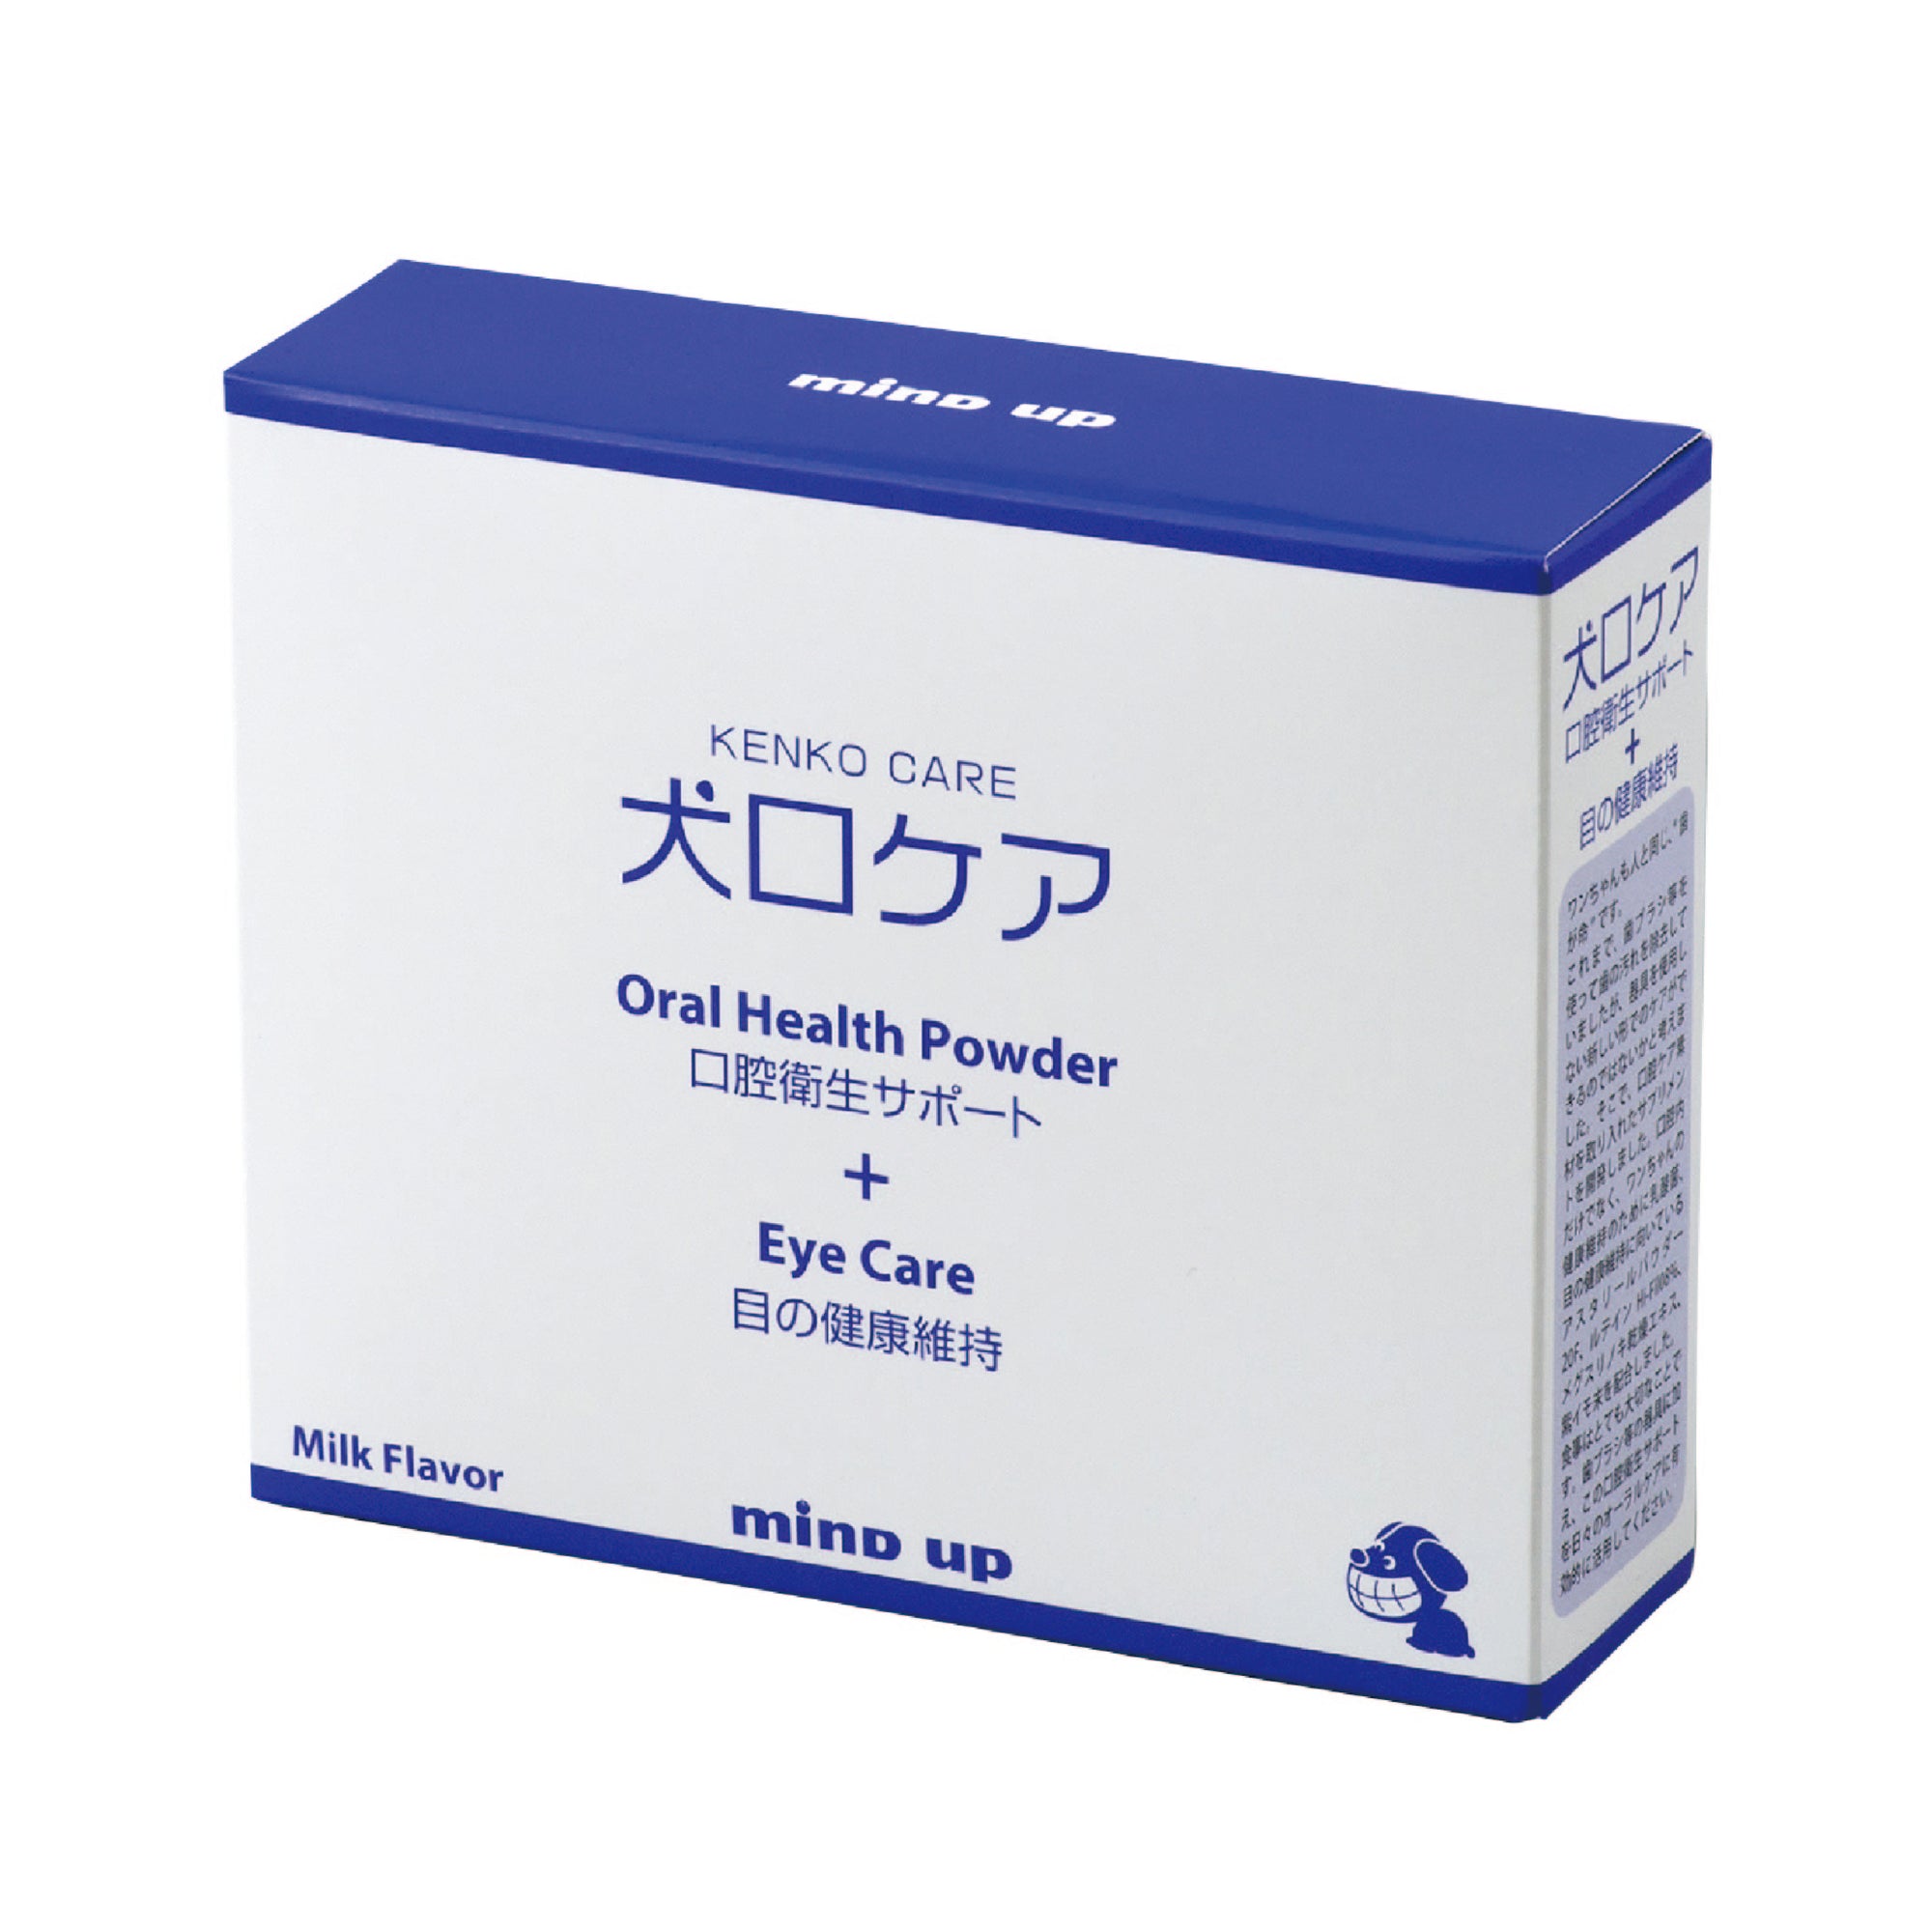 KENKO CARE Oral Health Powder + Eye Care Support